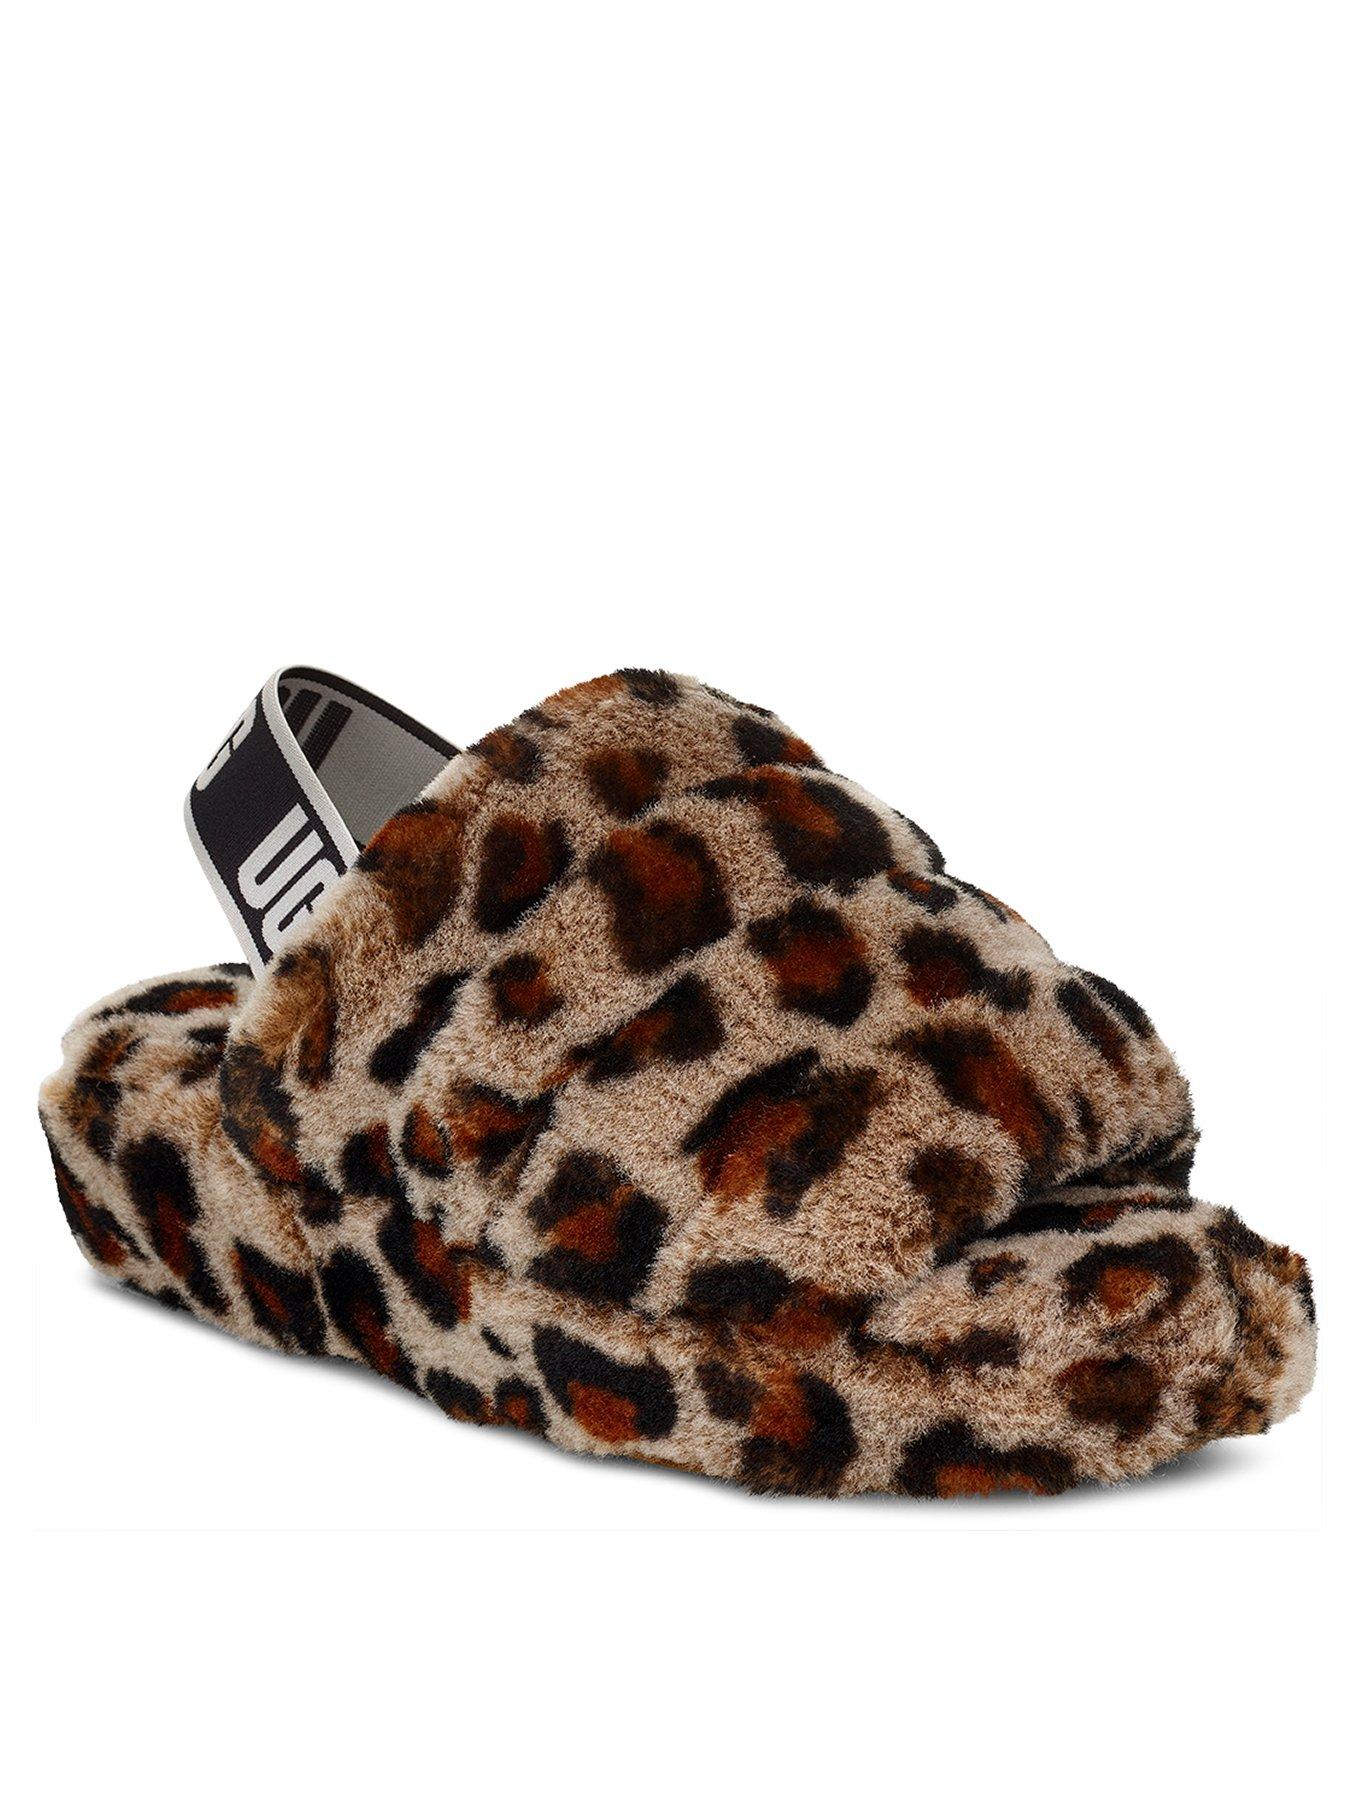 leopard print ugg slippers uk